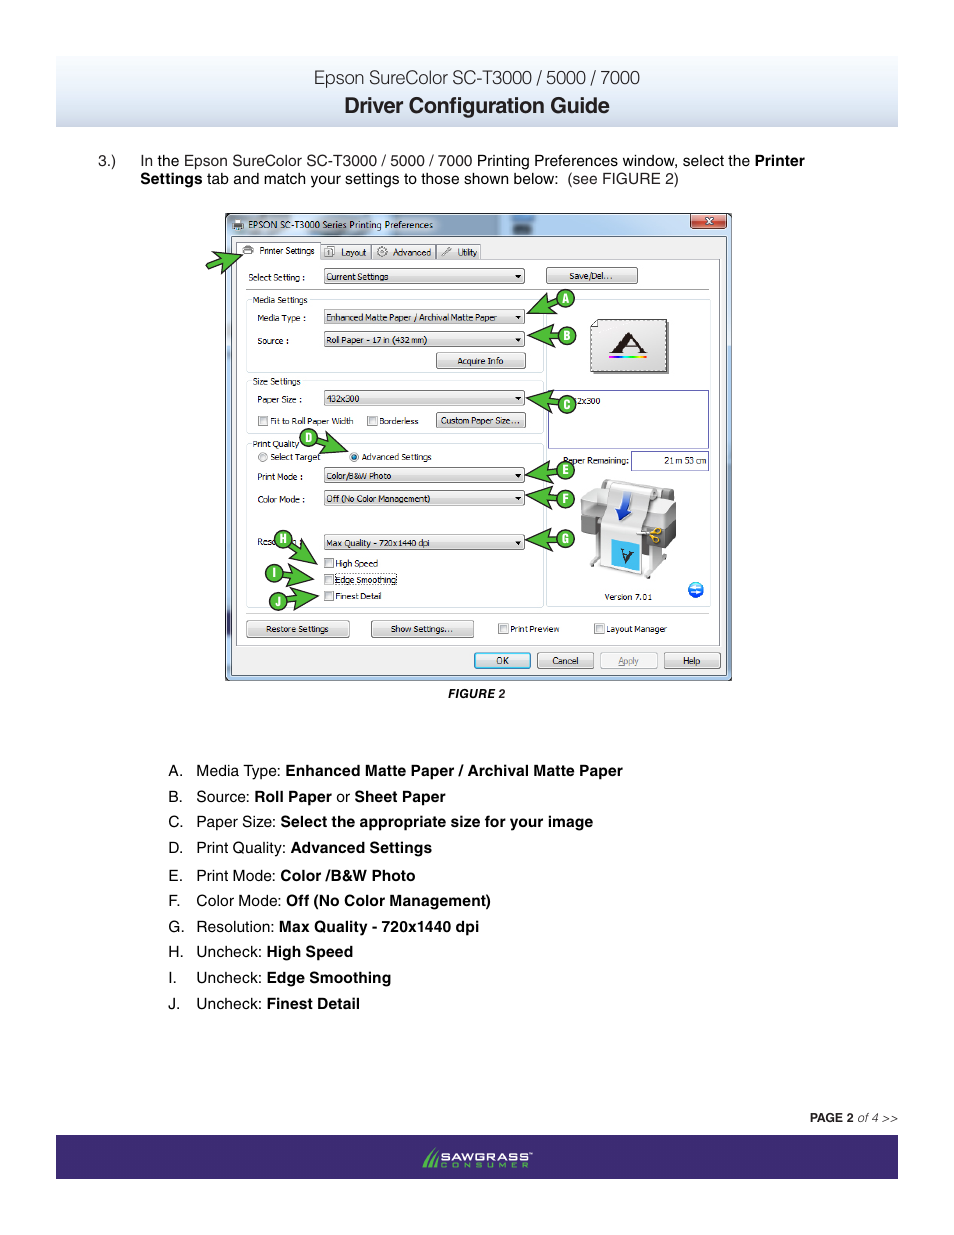 Driver configuration guide | Xpres SubliJet E Epson SureColor T5000 (Windows ICC Profile Setup): Driver Configuration Guide User Manual | Page 2 / 4